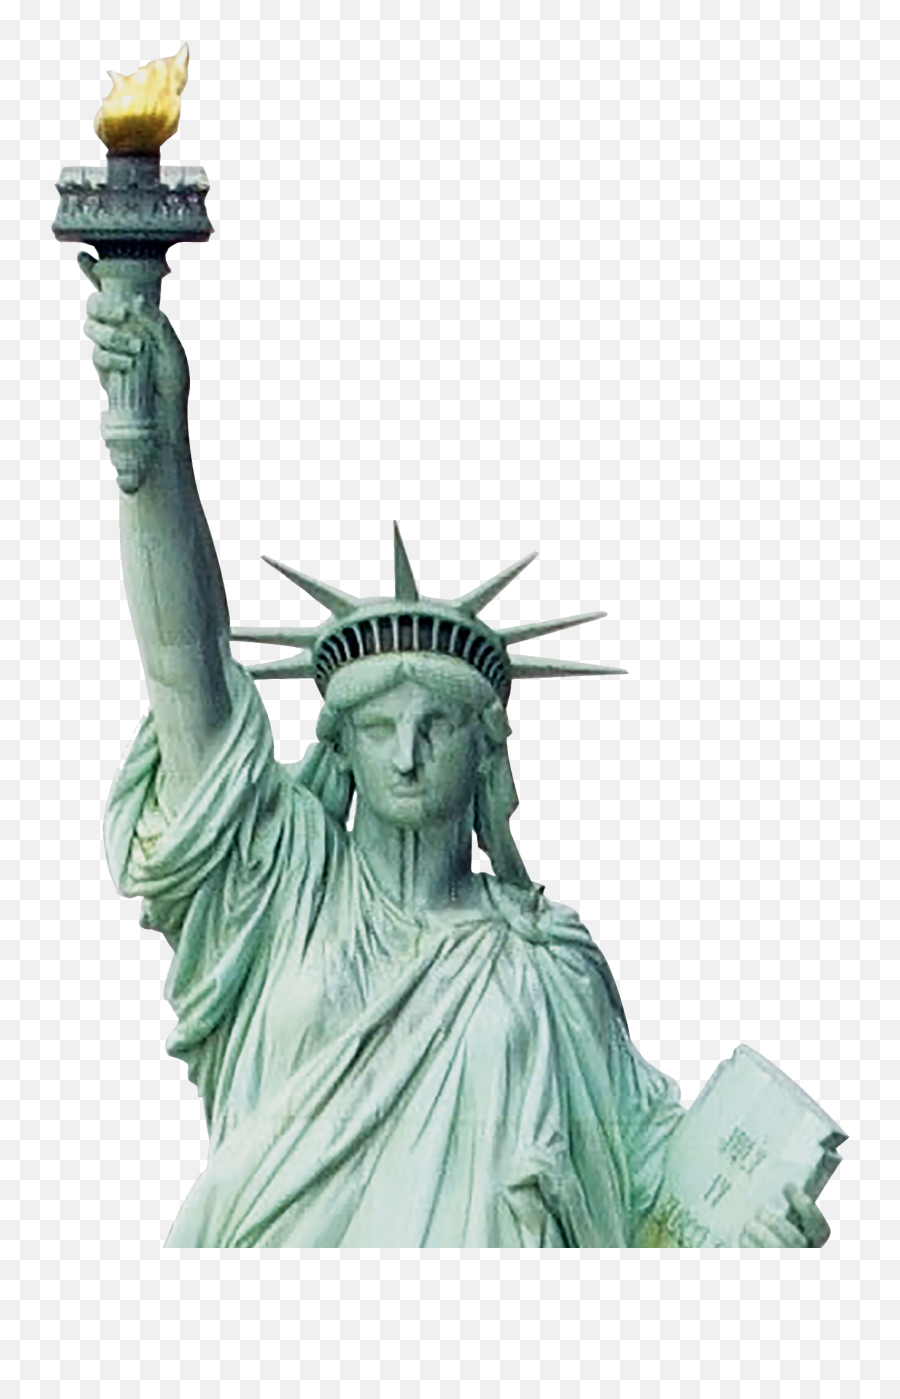 Statue - Oflibertytransparentbackgroundshaved New York Statue Of Liberty Png,Transparent Backround